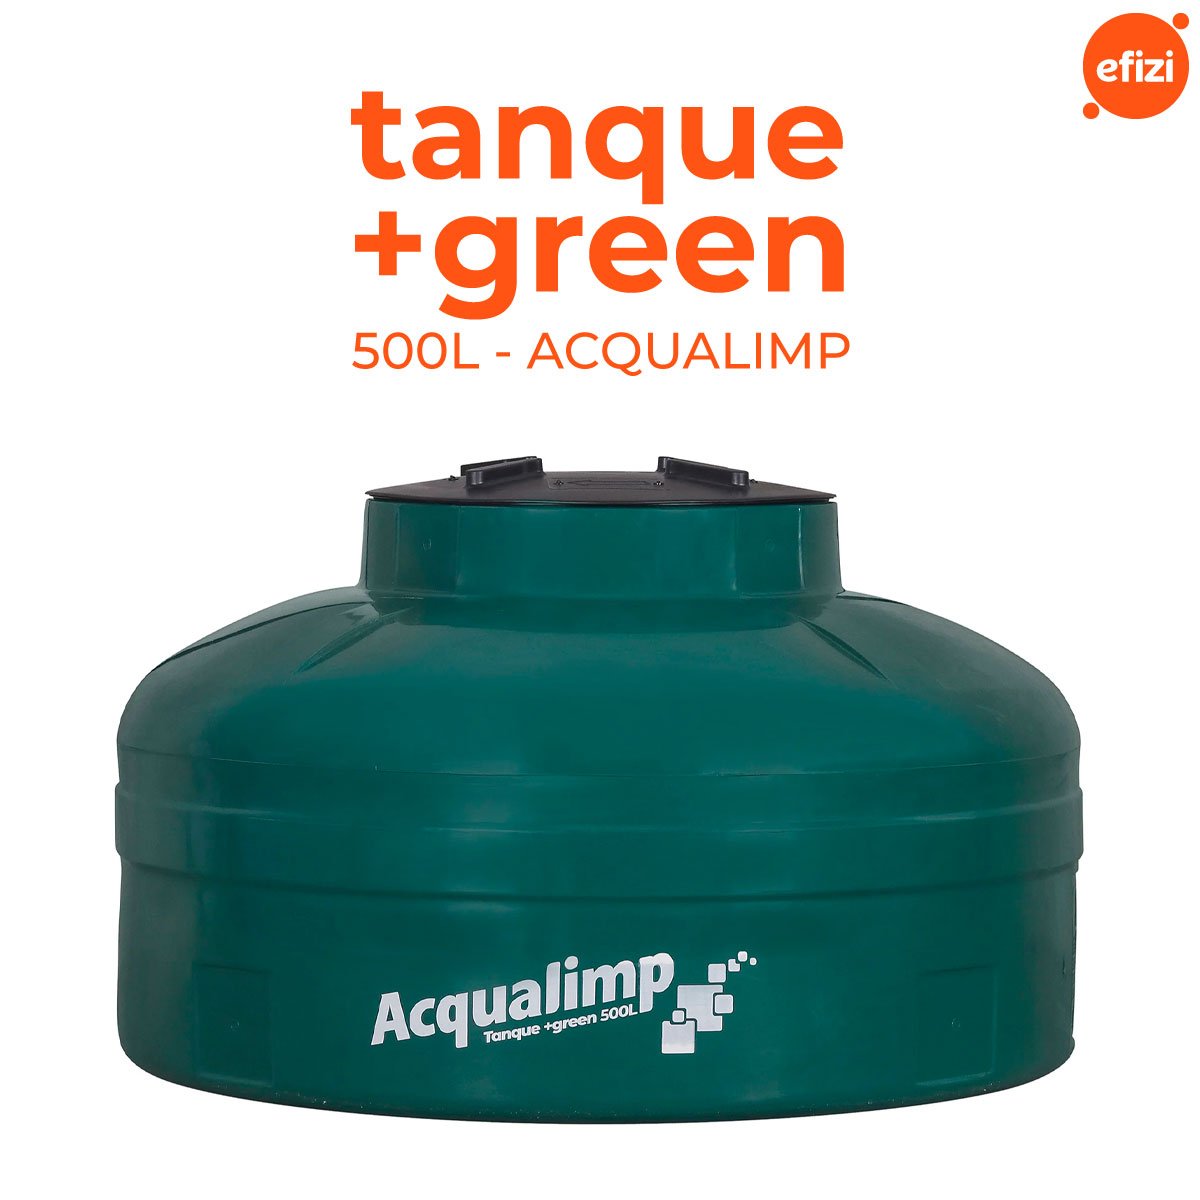 Tanque Green+ 500l - Acqualimp - 2